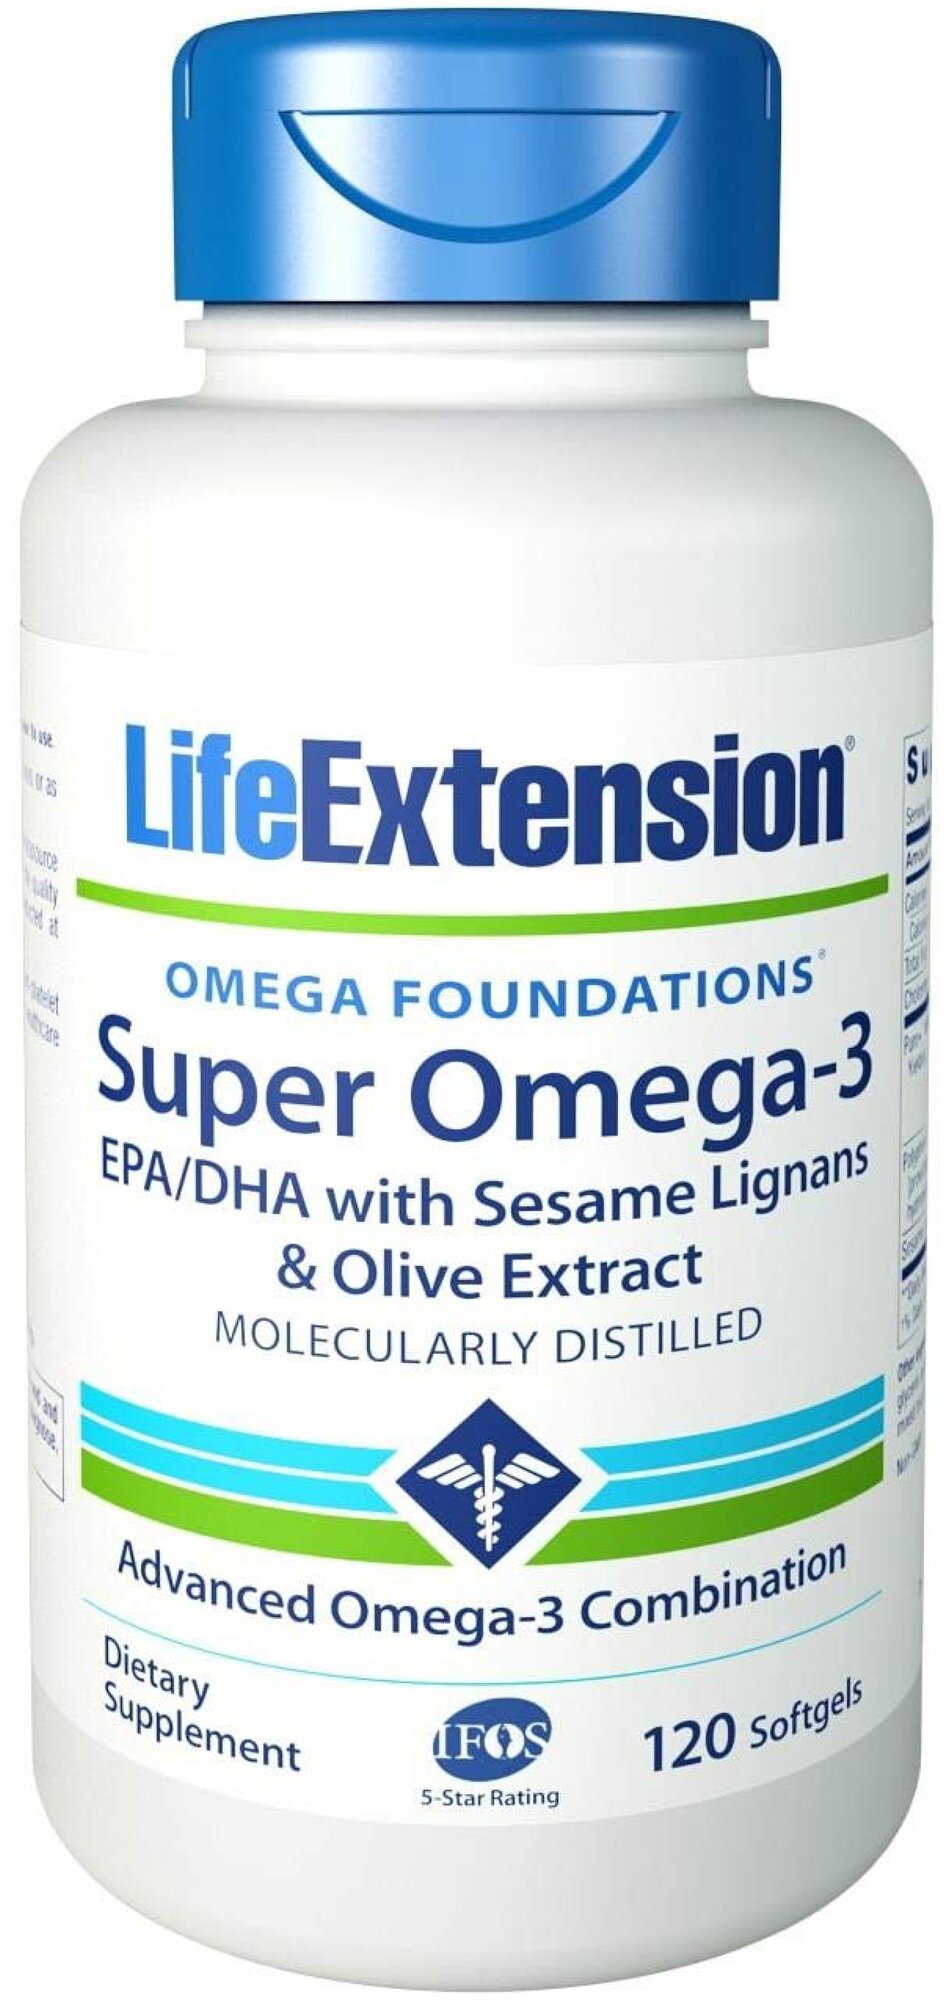 br>スーパーオメガ3 EPA DHA フィッシュオイル Extract Omega-3 Oil Lignans 240粒  ゴマリグナン＆オリーブエキス ソフトジェル Sesame Fish ライフエクステンション<br>Super DHA EPA Olive  脂肪酸・オイル